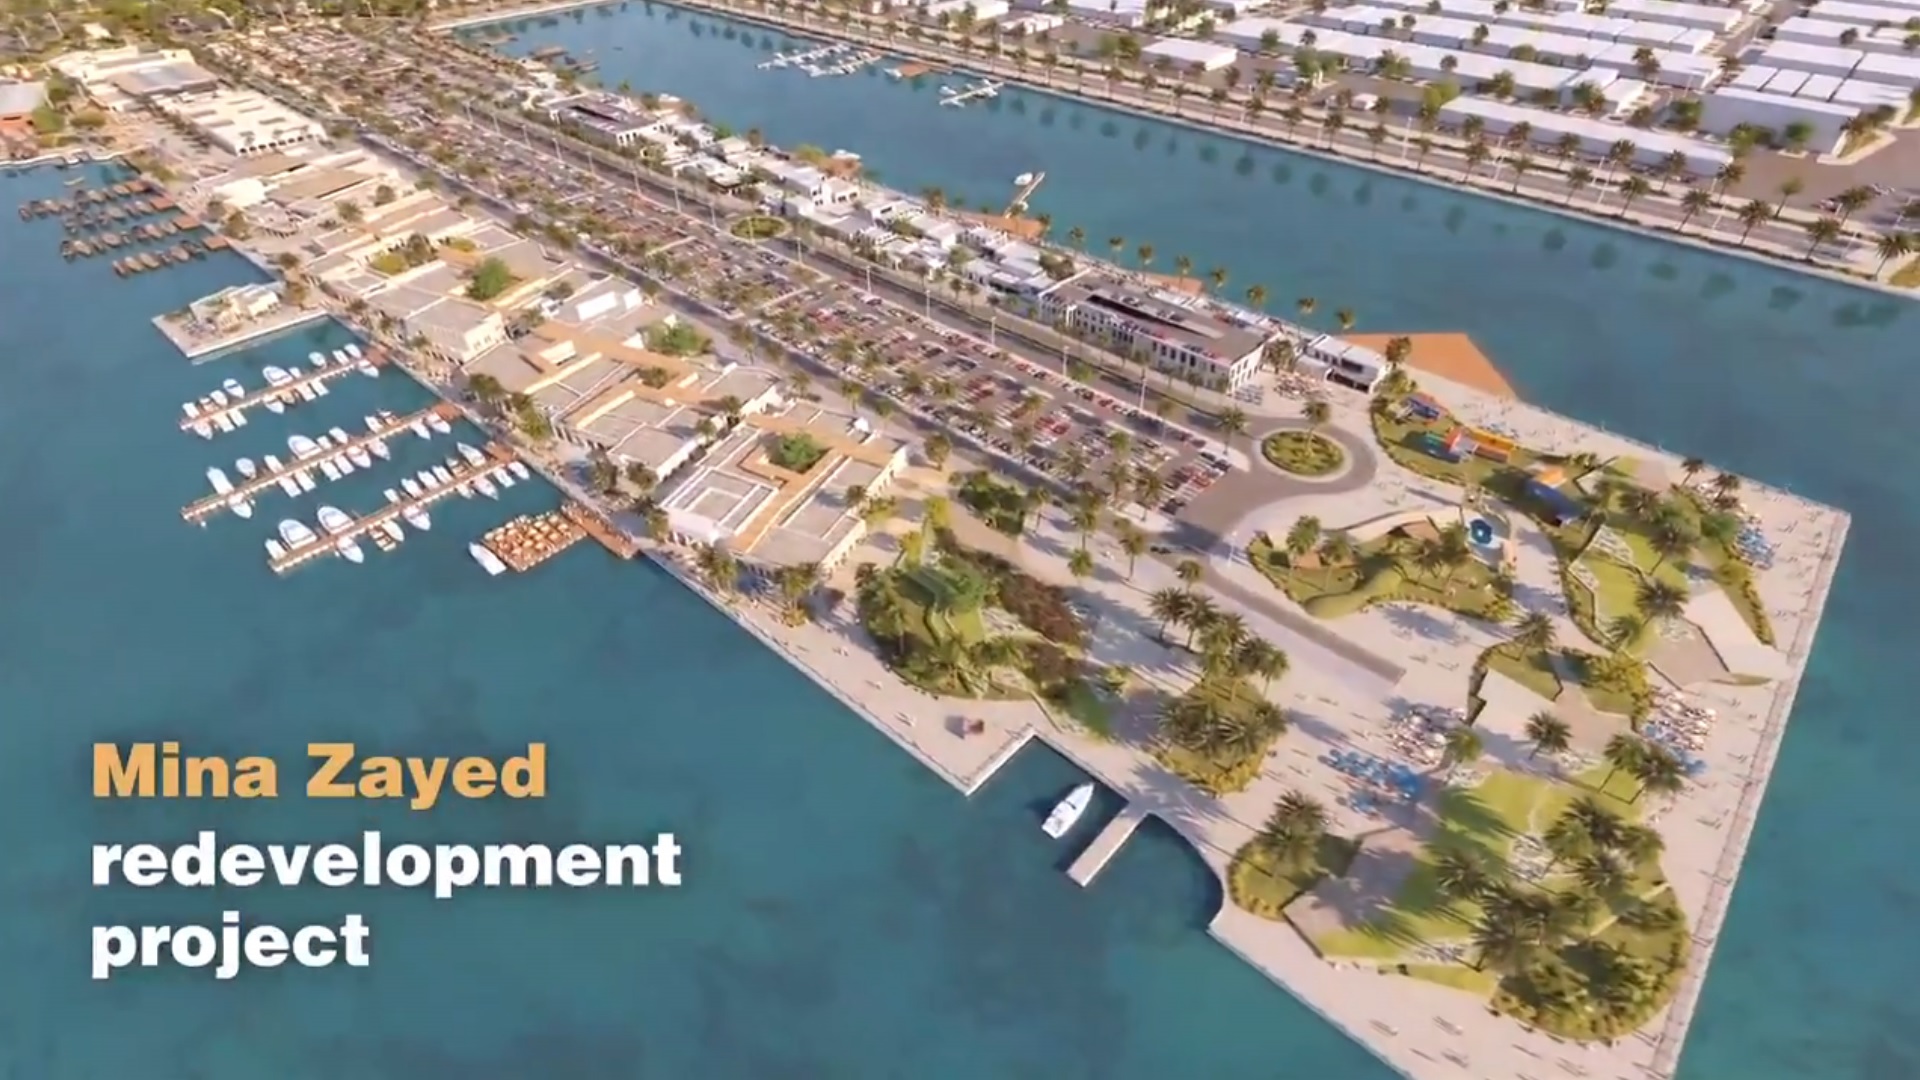 Mina Zayed redevelopment project